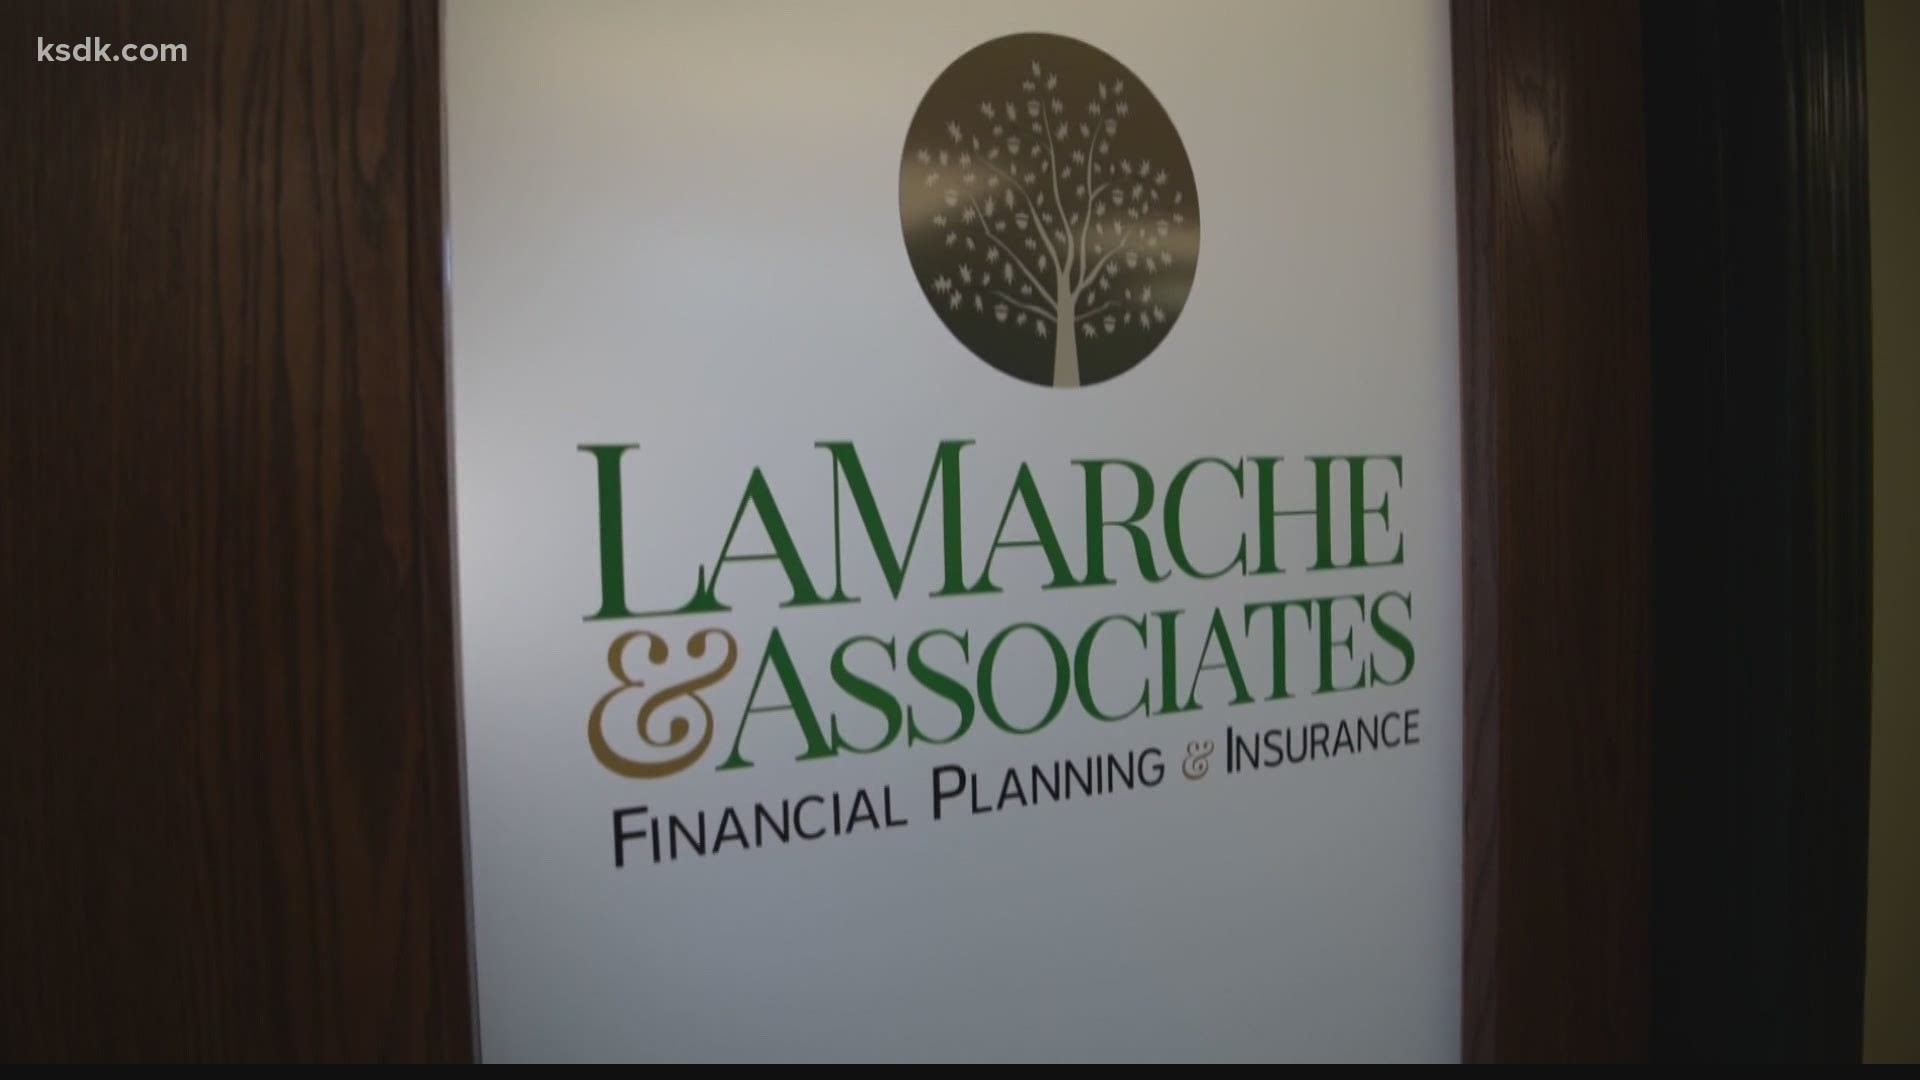 At LaMarche & Associates, “Your future is our focus.”